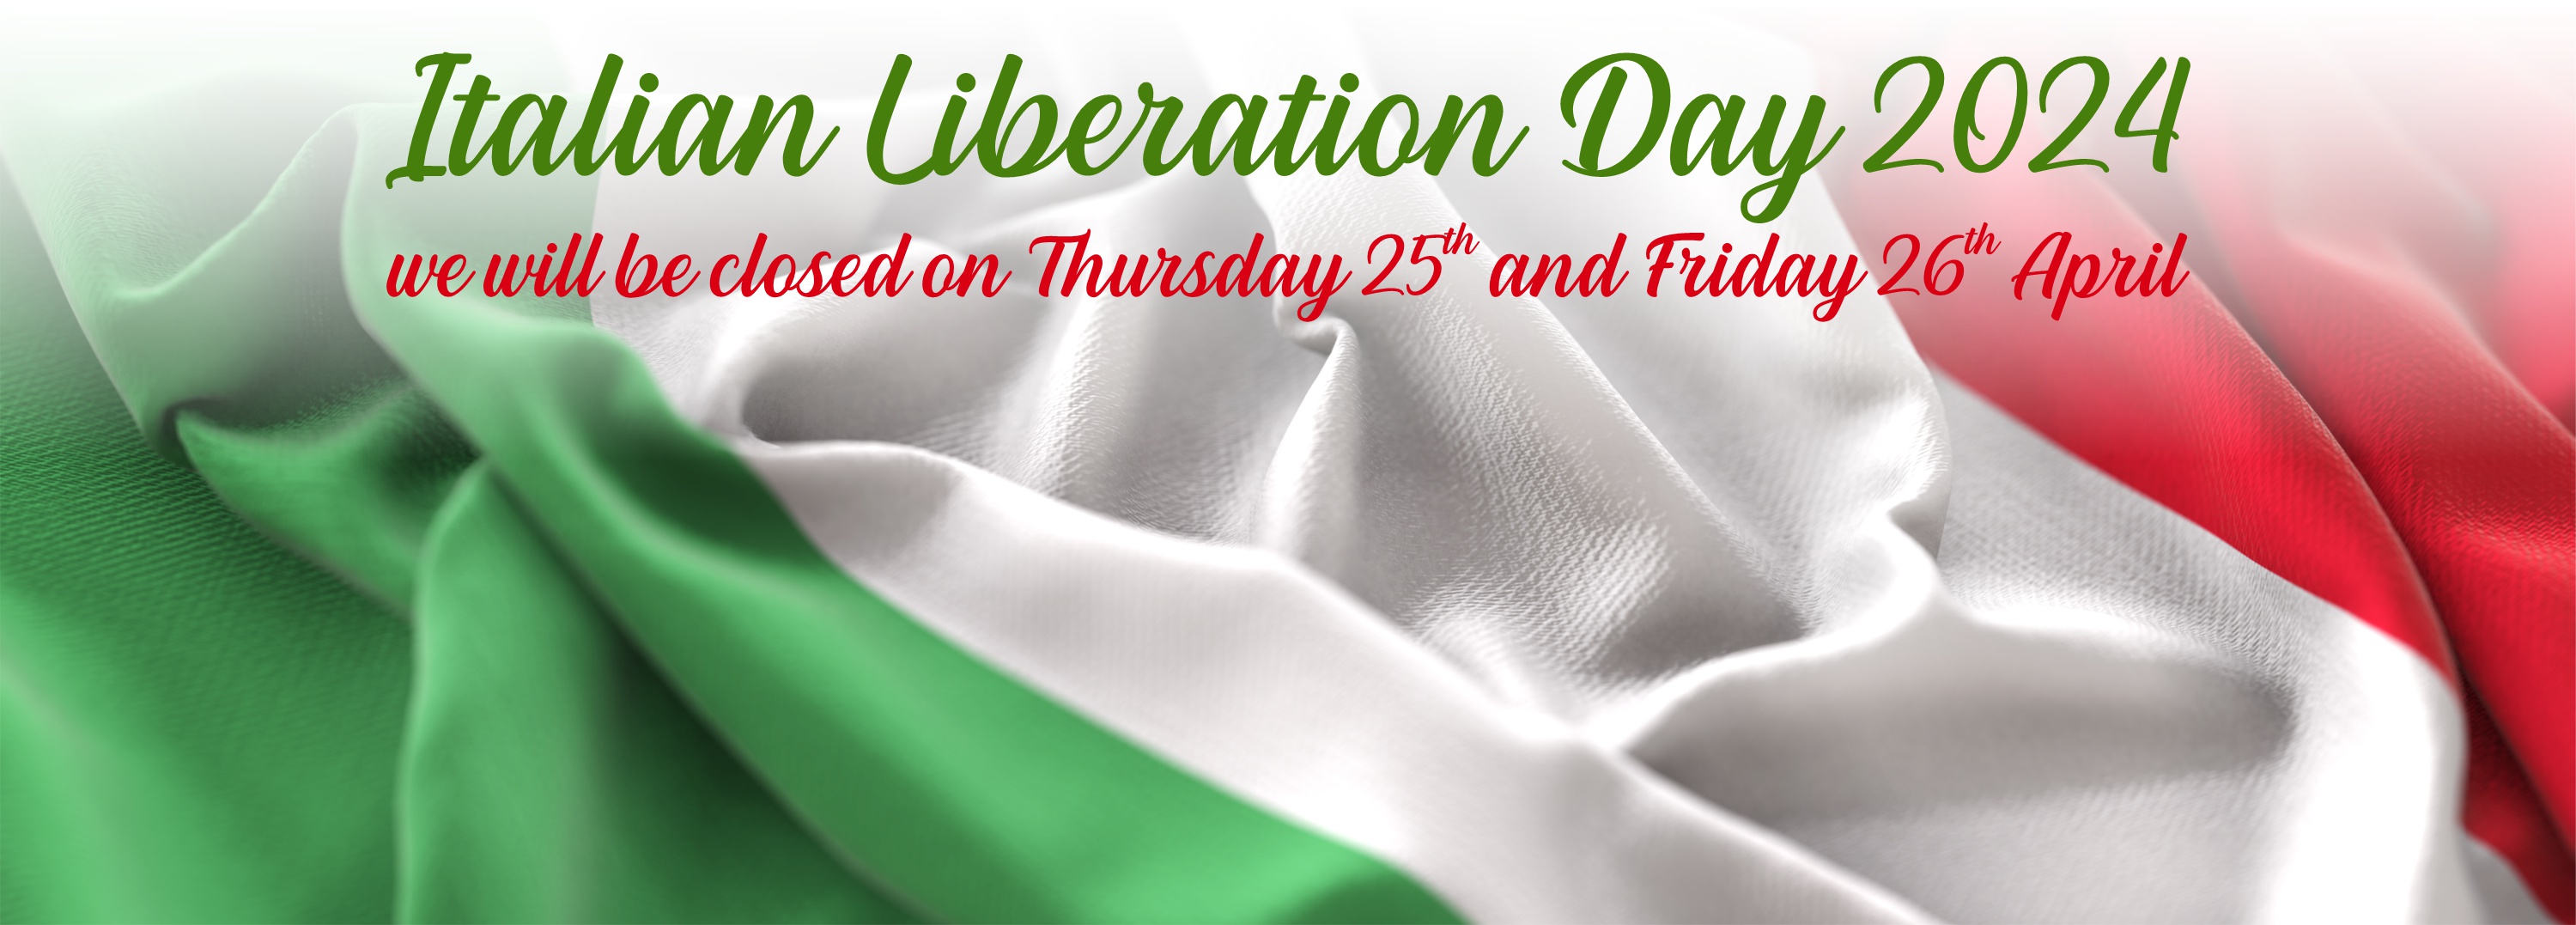 Italian Liberation Day 2024